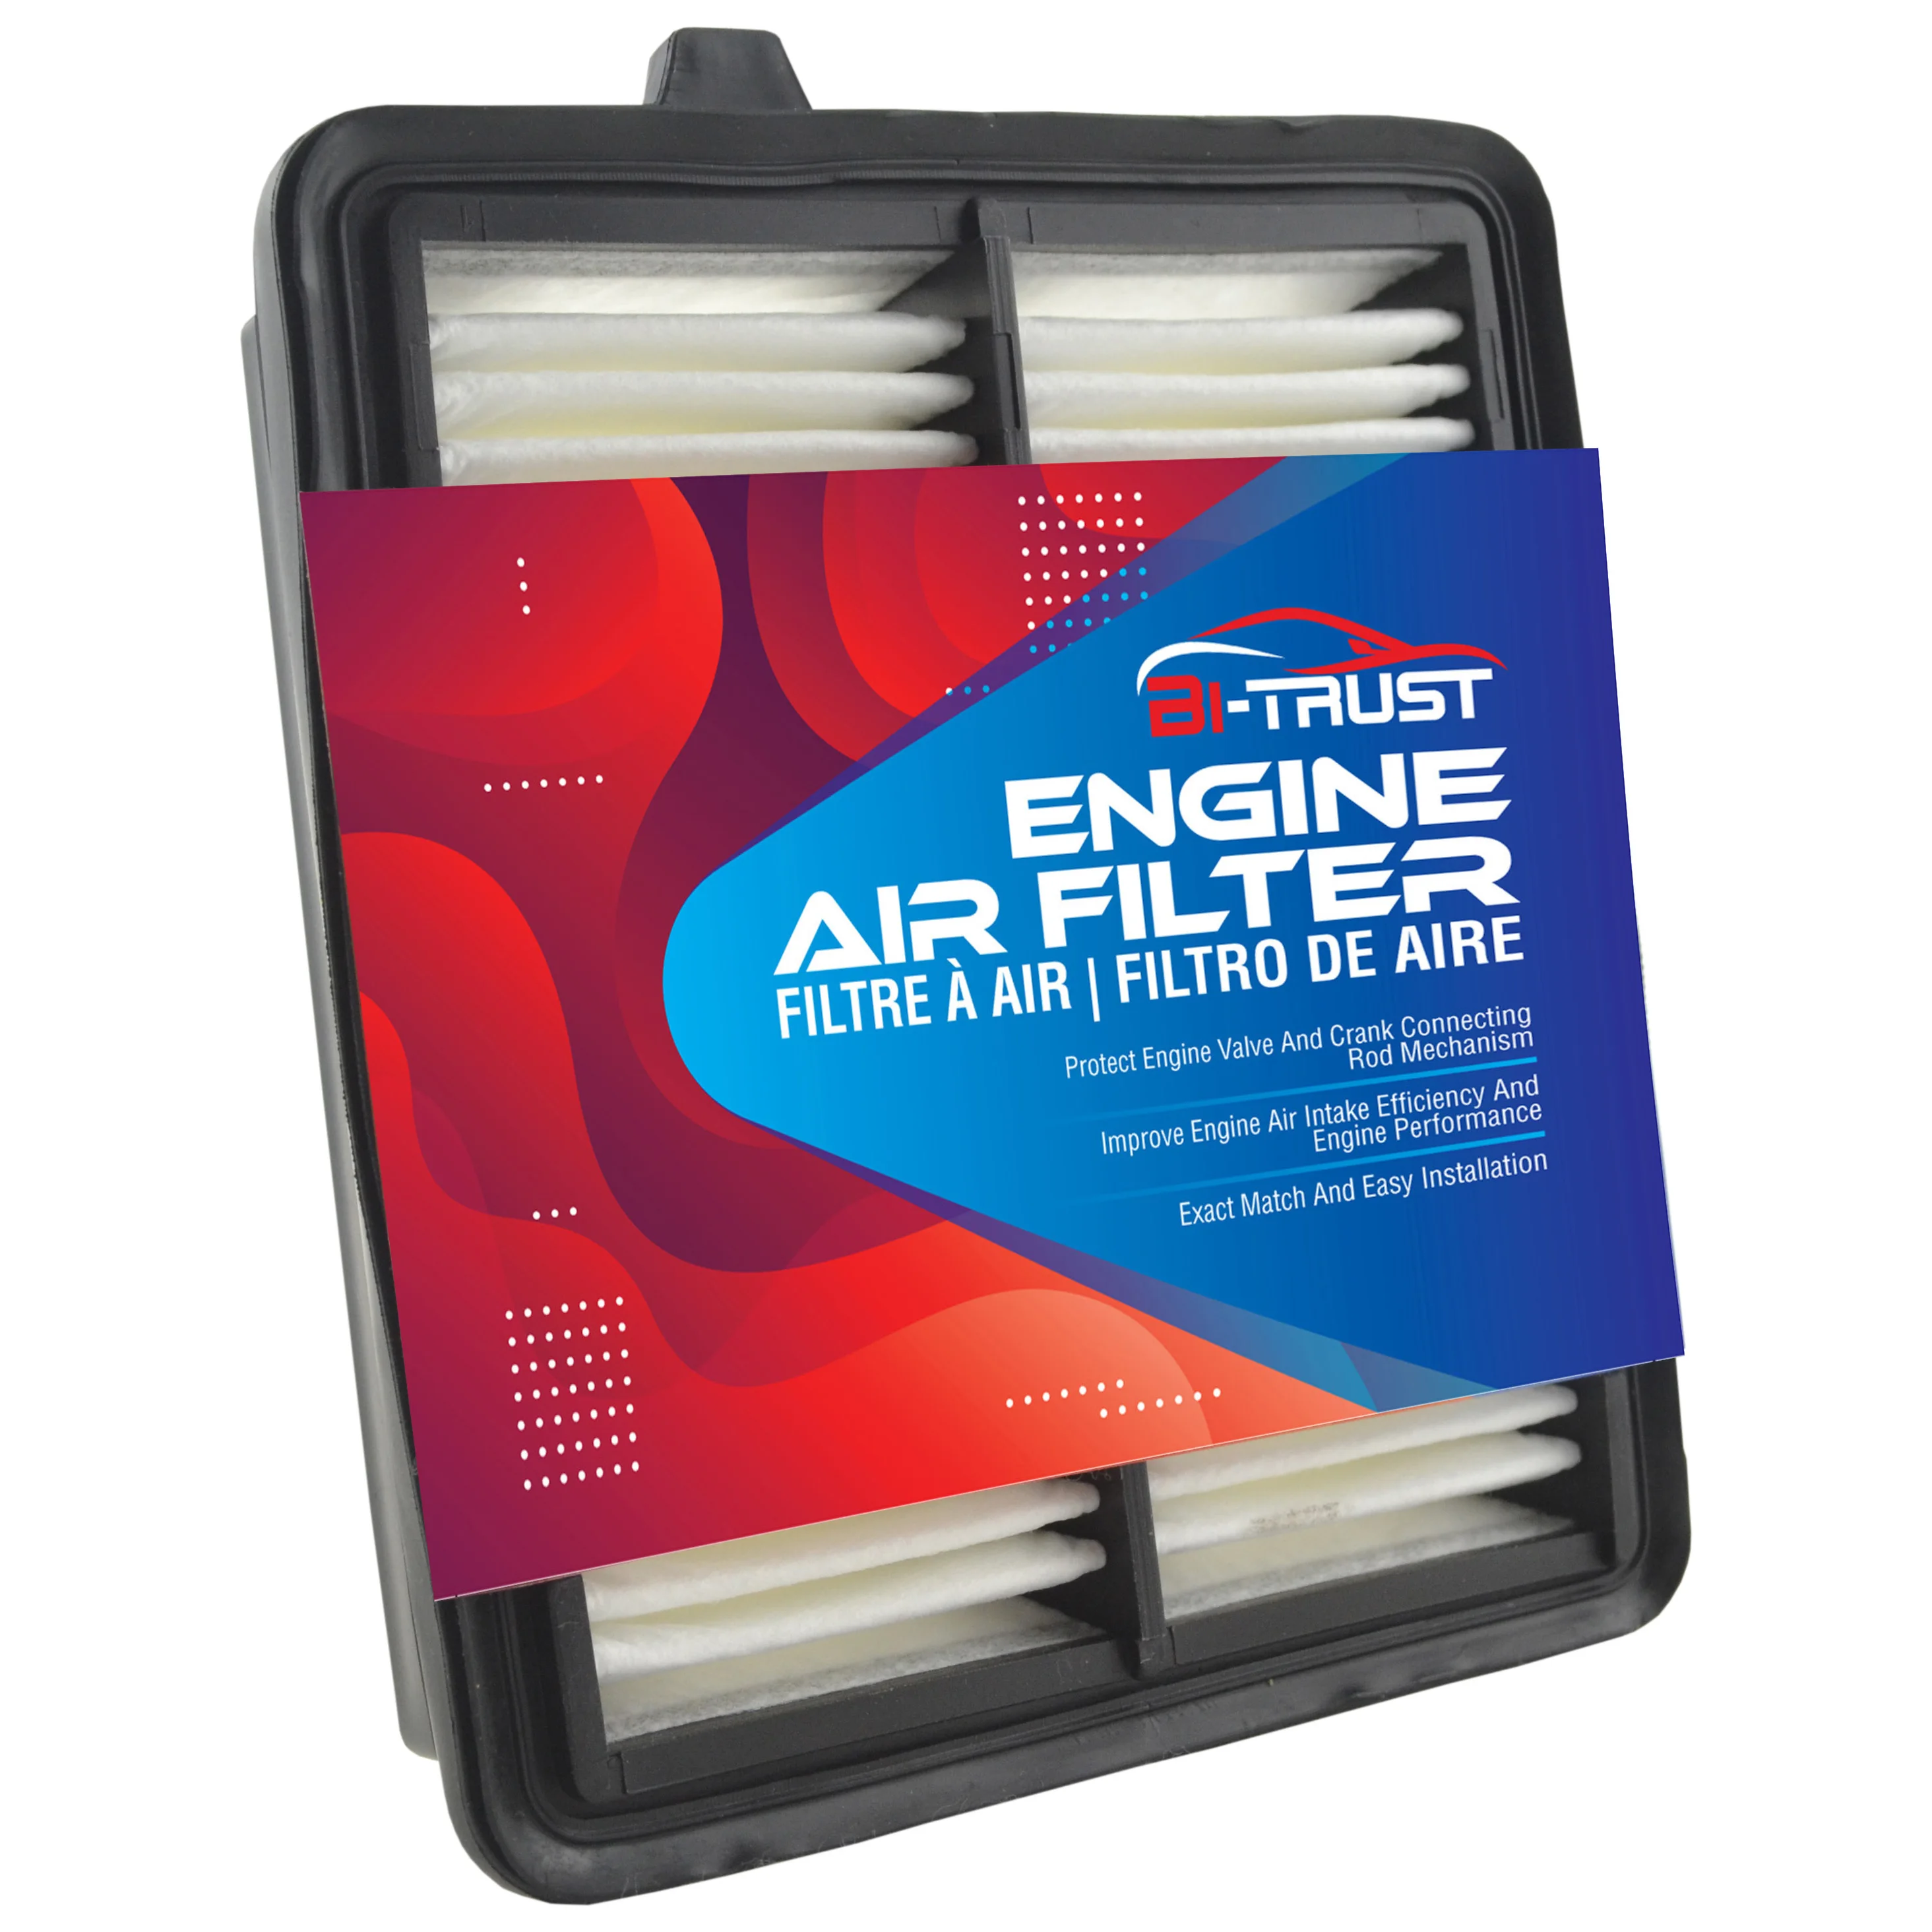 Bi-Trust Combo Set Engine & Carbon Cabin Air Filter for Honda Insight 2010-2014 L4 1.3L